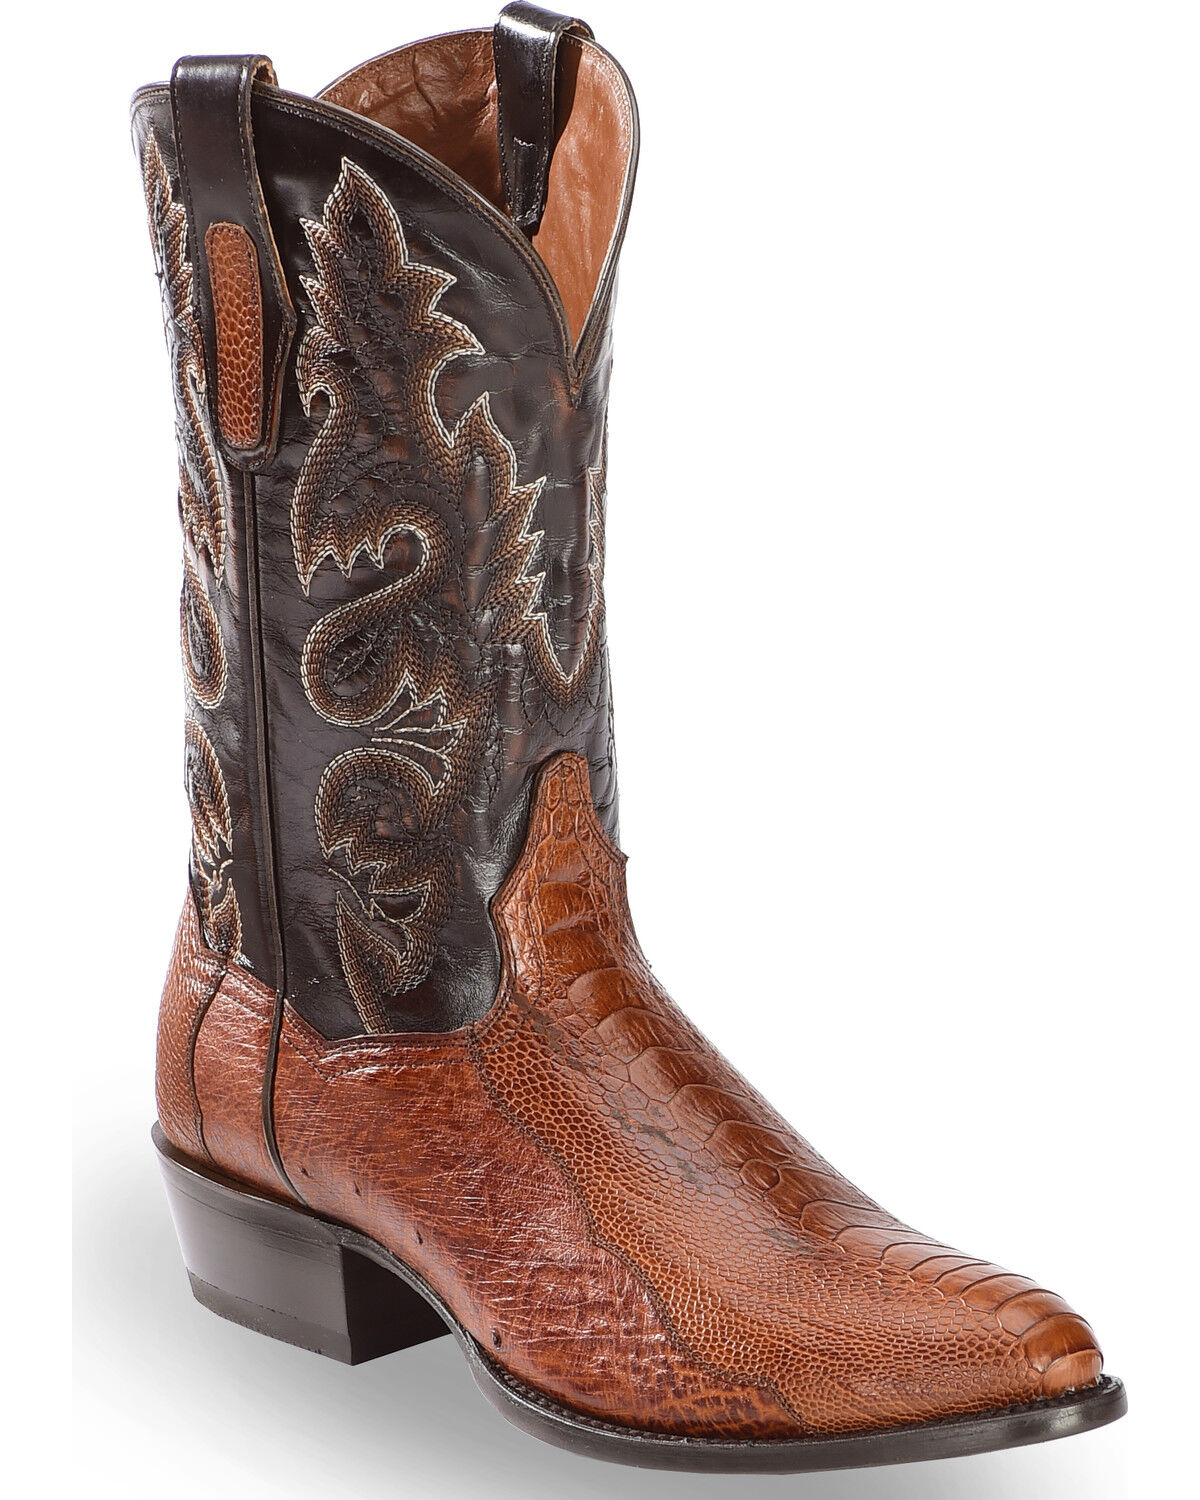 size 17 mens cowboy boots